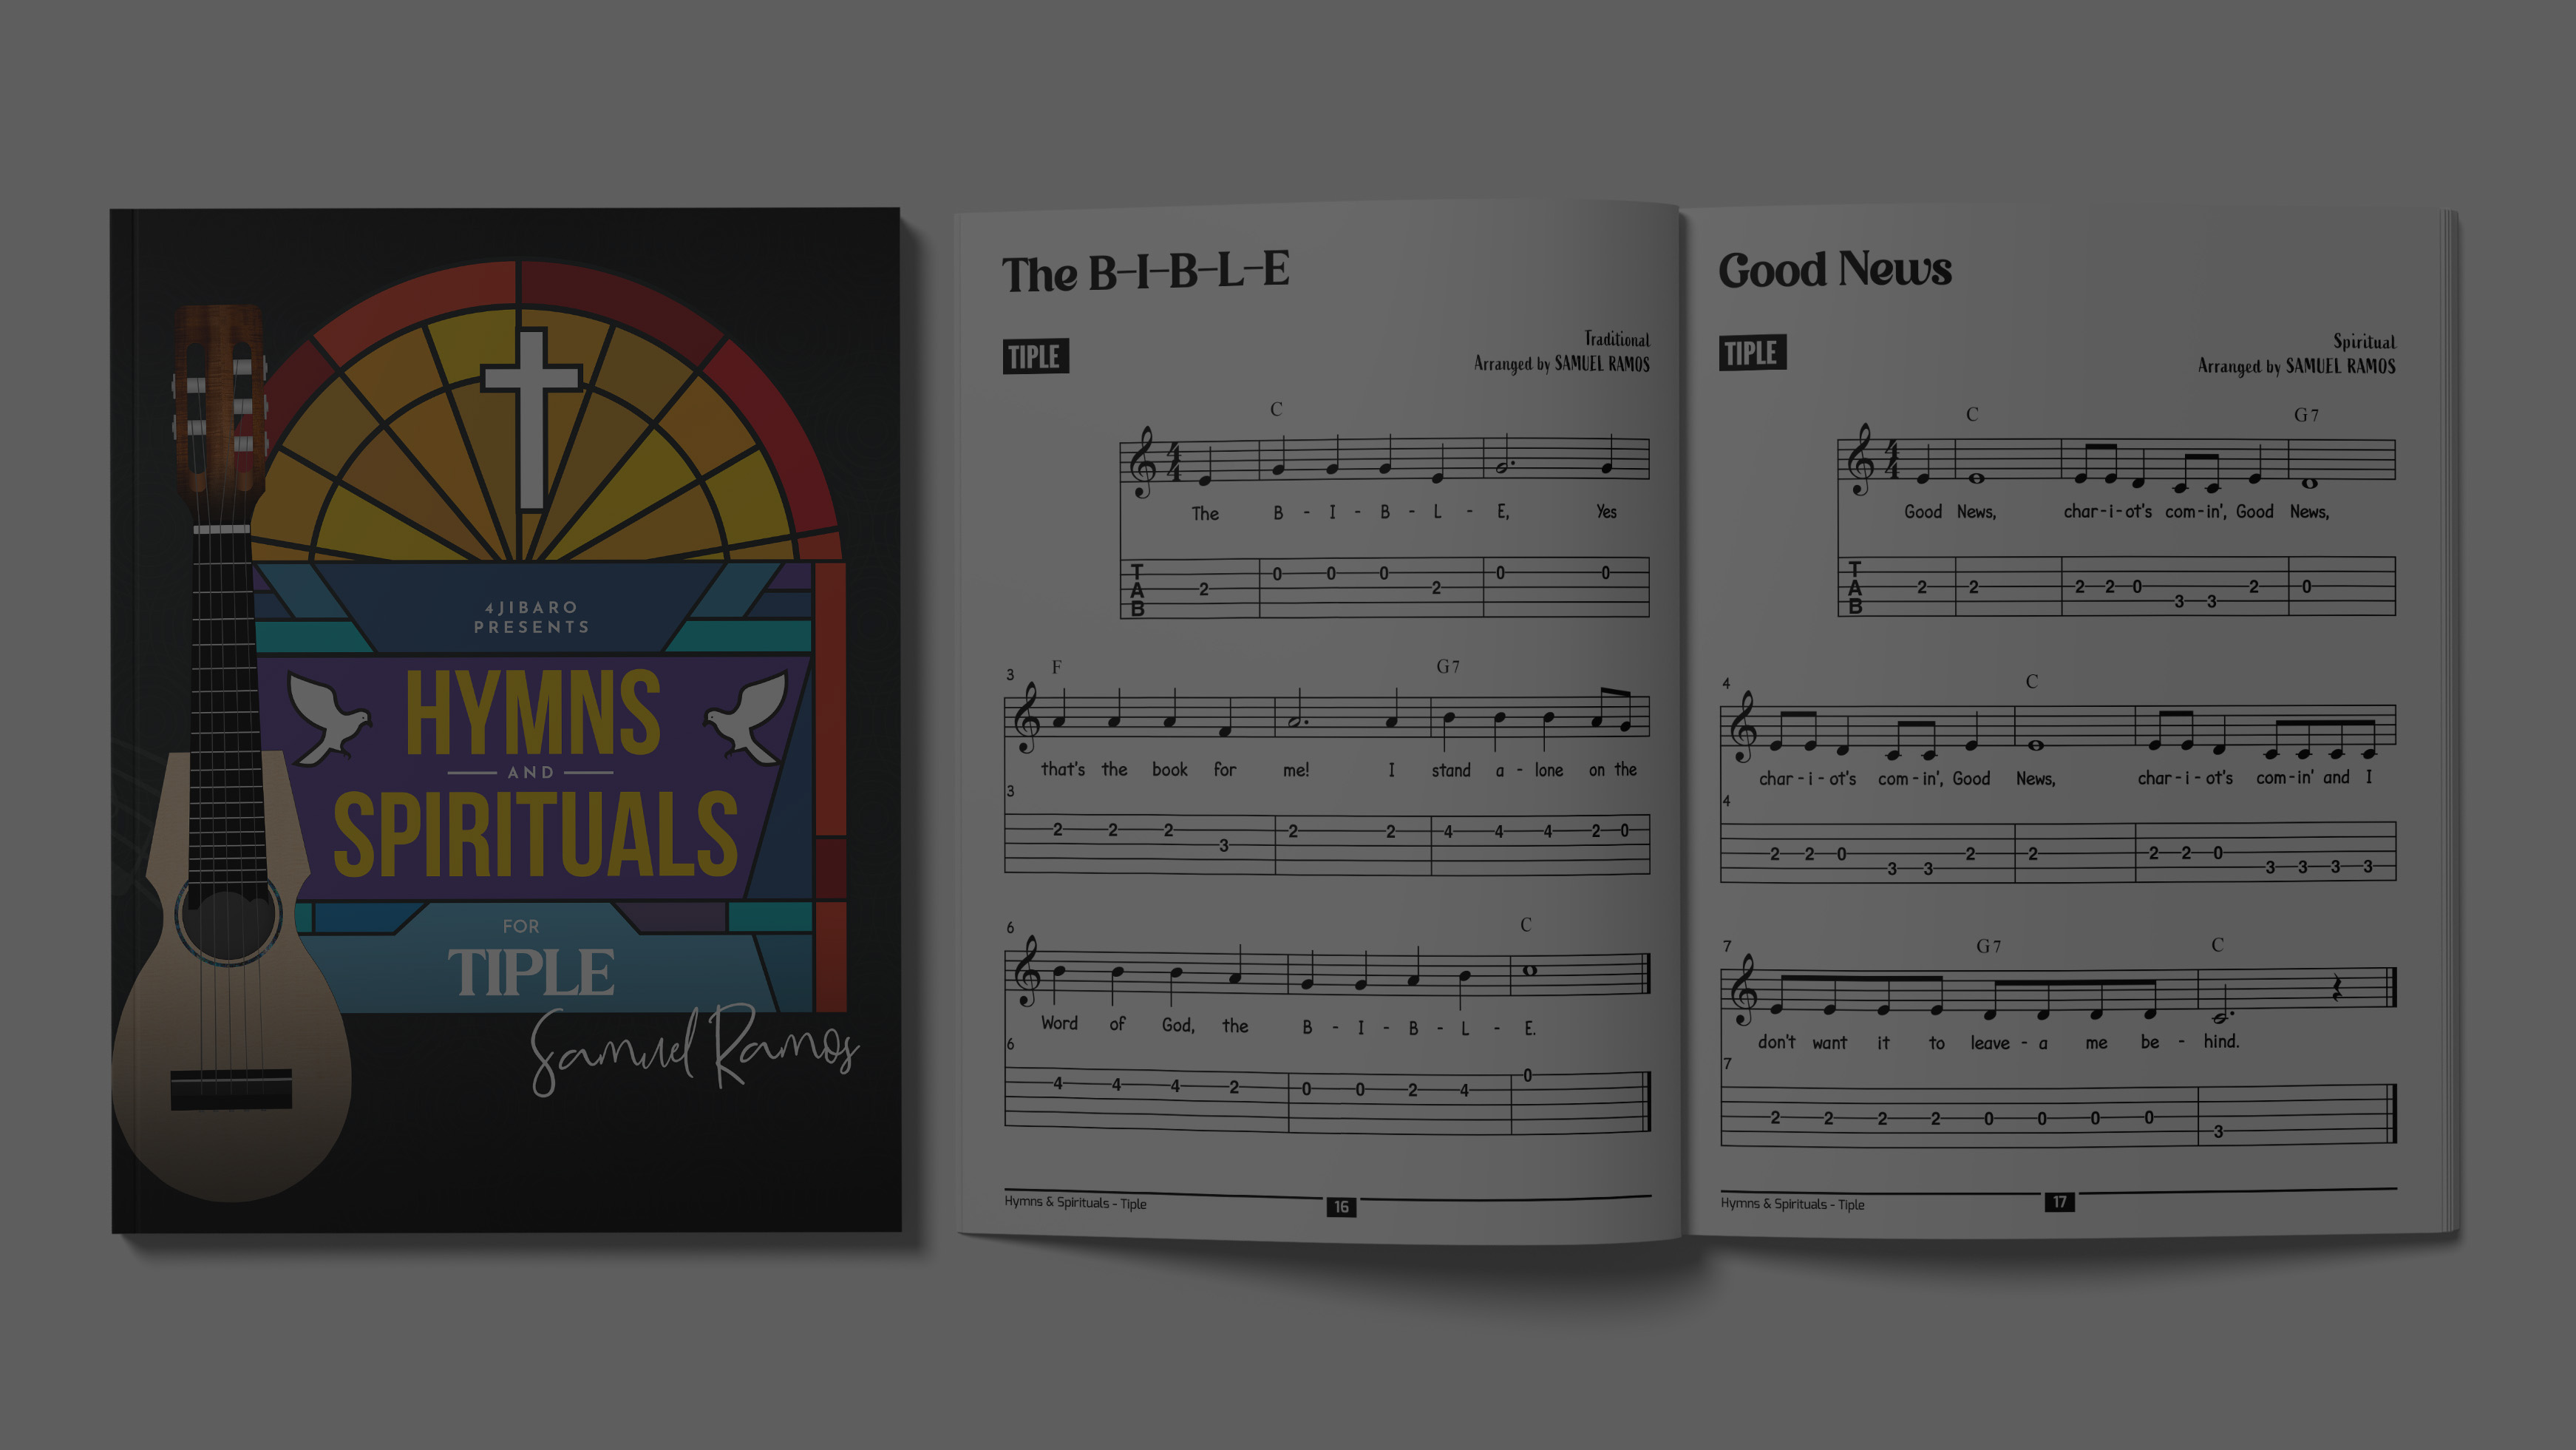 Hymns and Spirituals for Tiple Puertorriqueño (Puerto Rico)